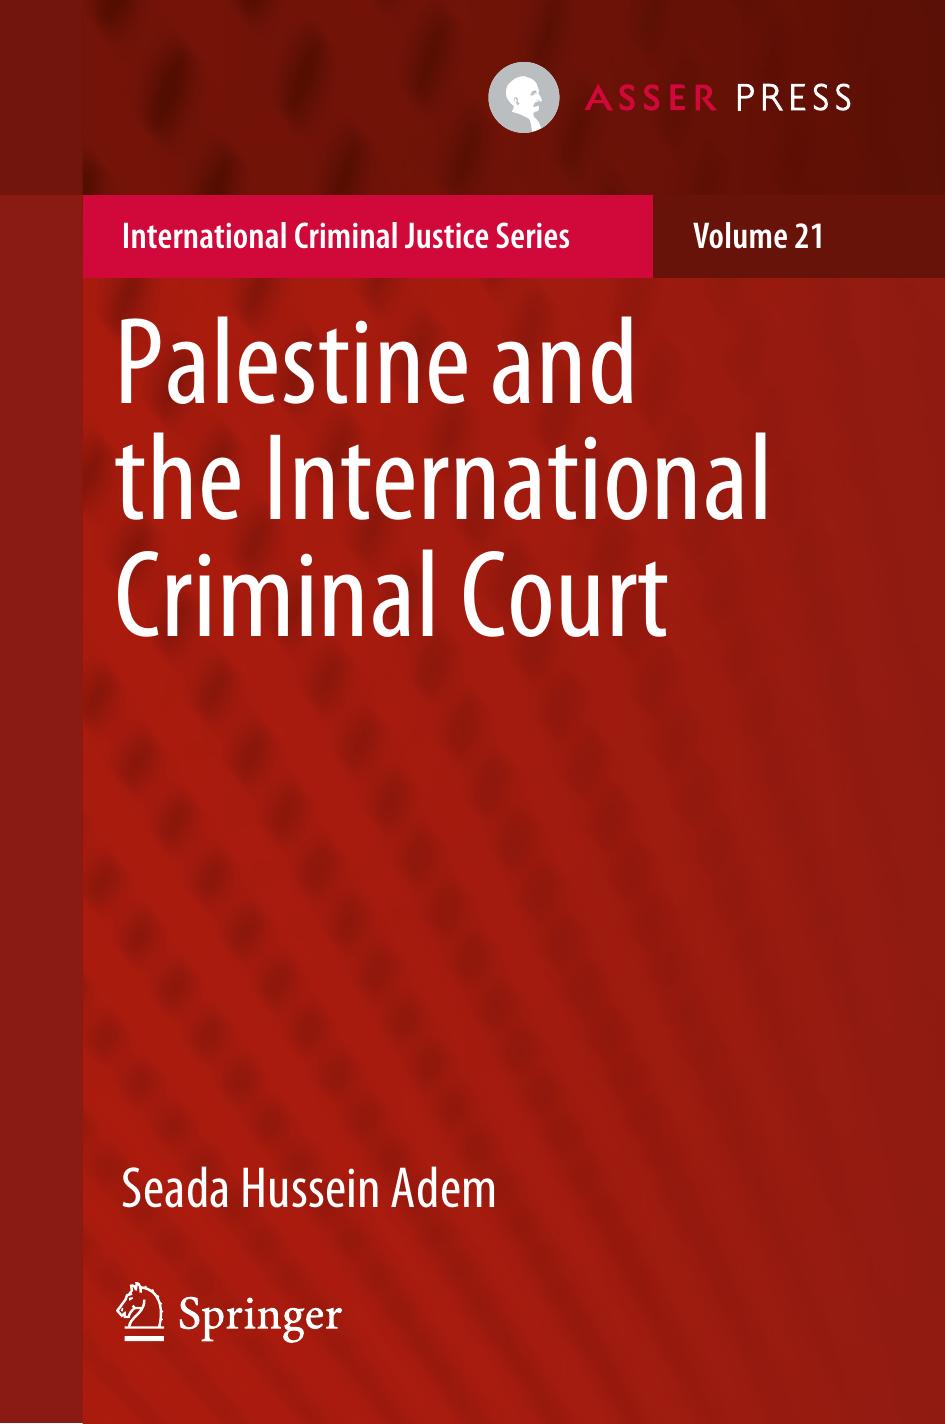 Palestine and the International Criminal Court by Seada Hussein Adem